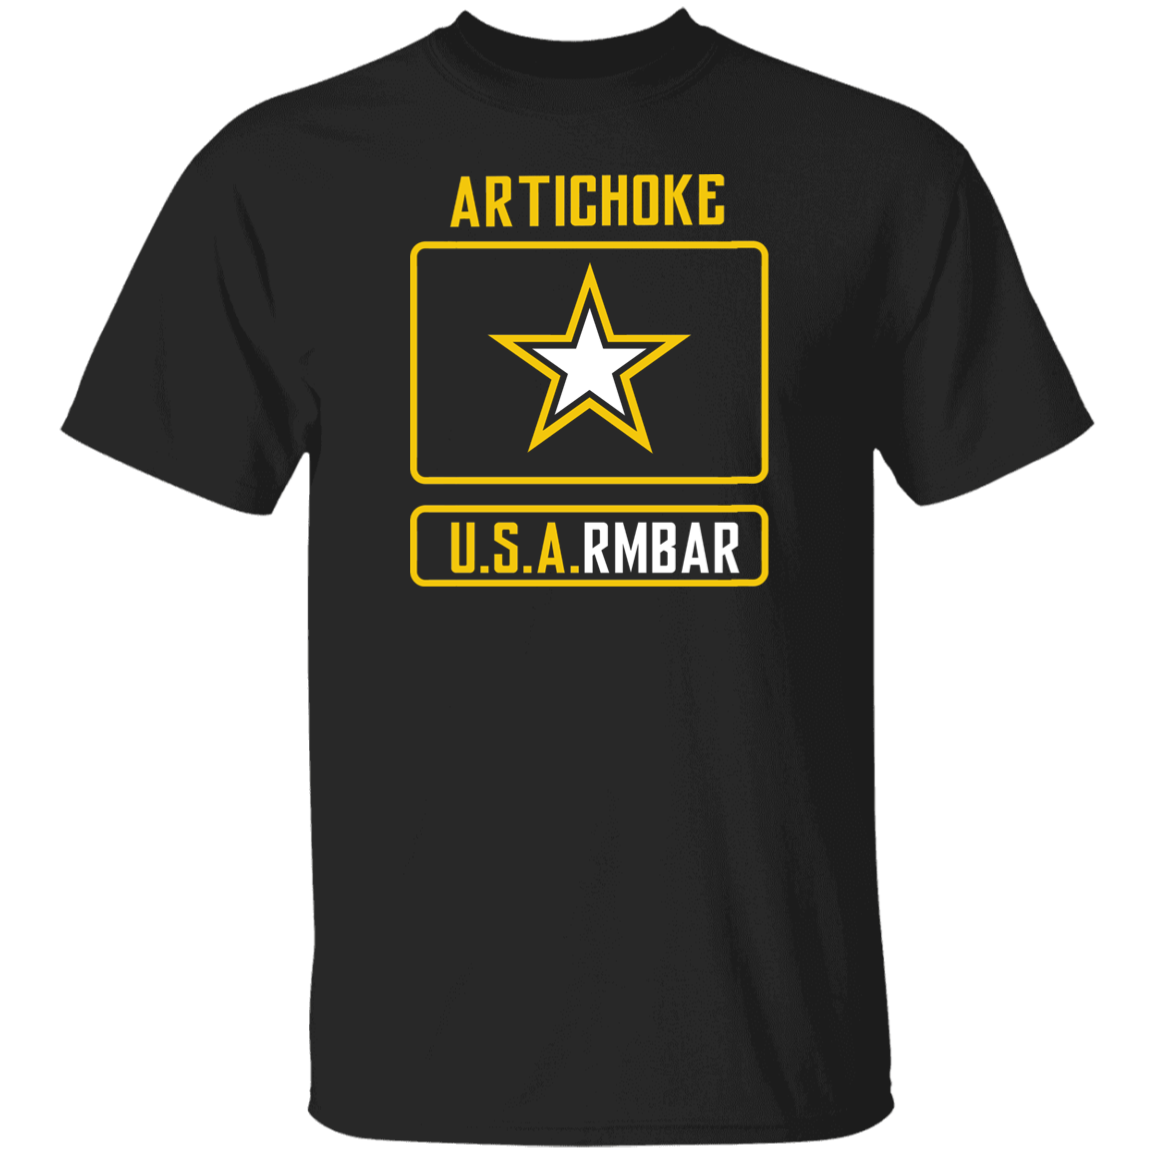 ArtichokeUSA Custom Design #54. Artichoke USArmbar. US Army Parody. Basic 100% Cotton T-Shirt